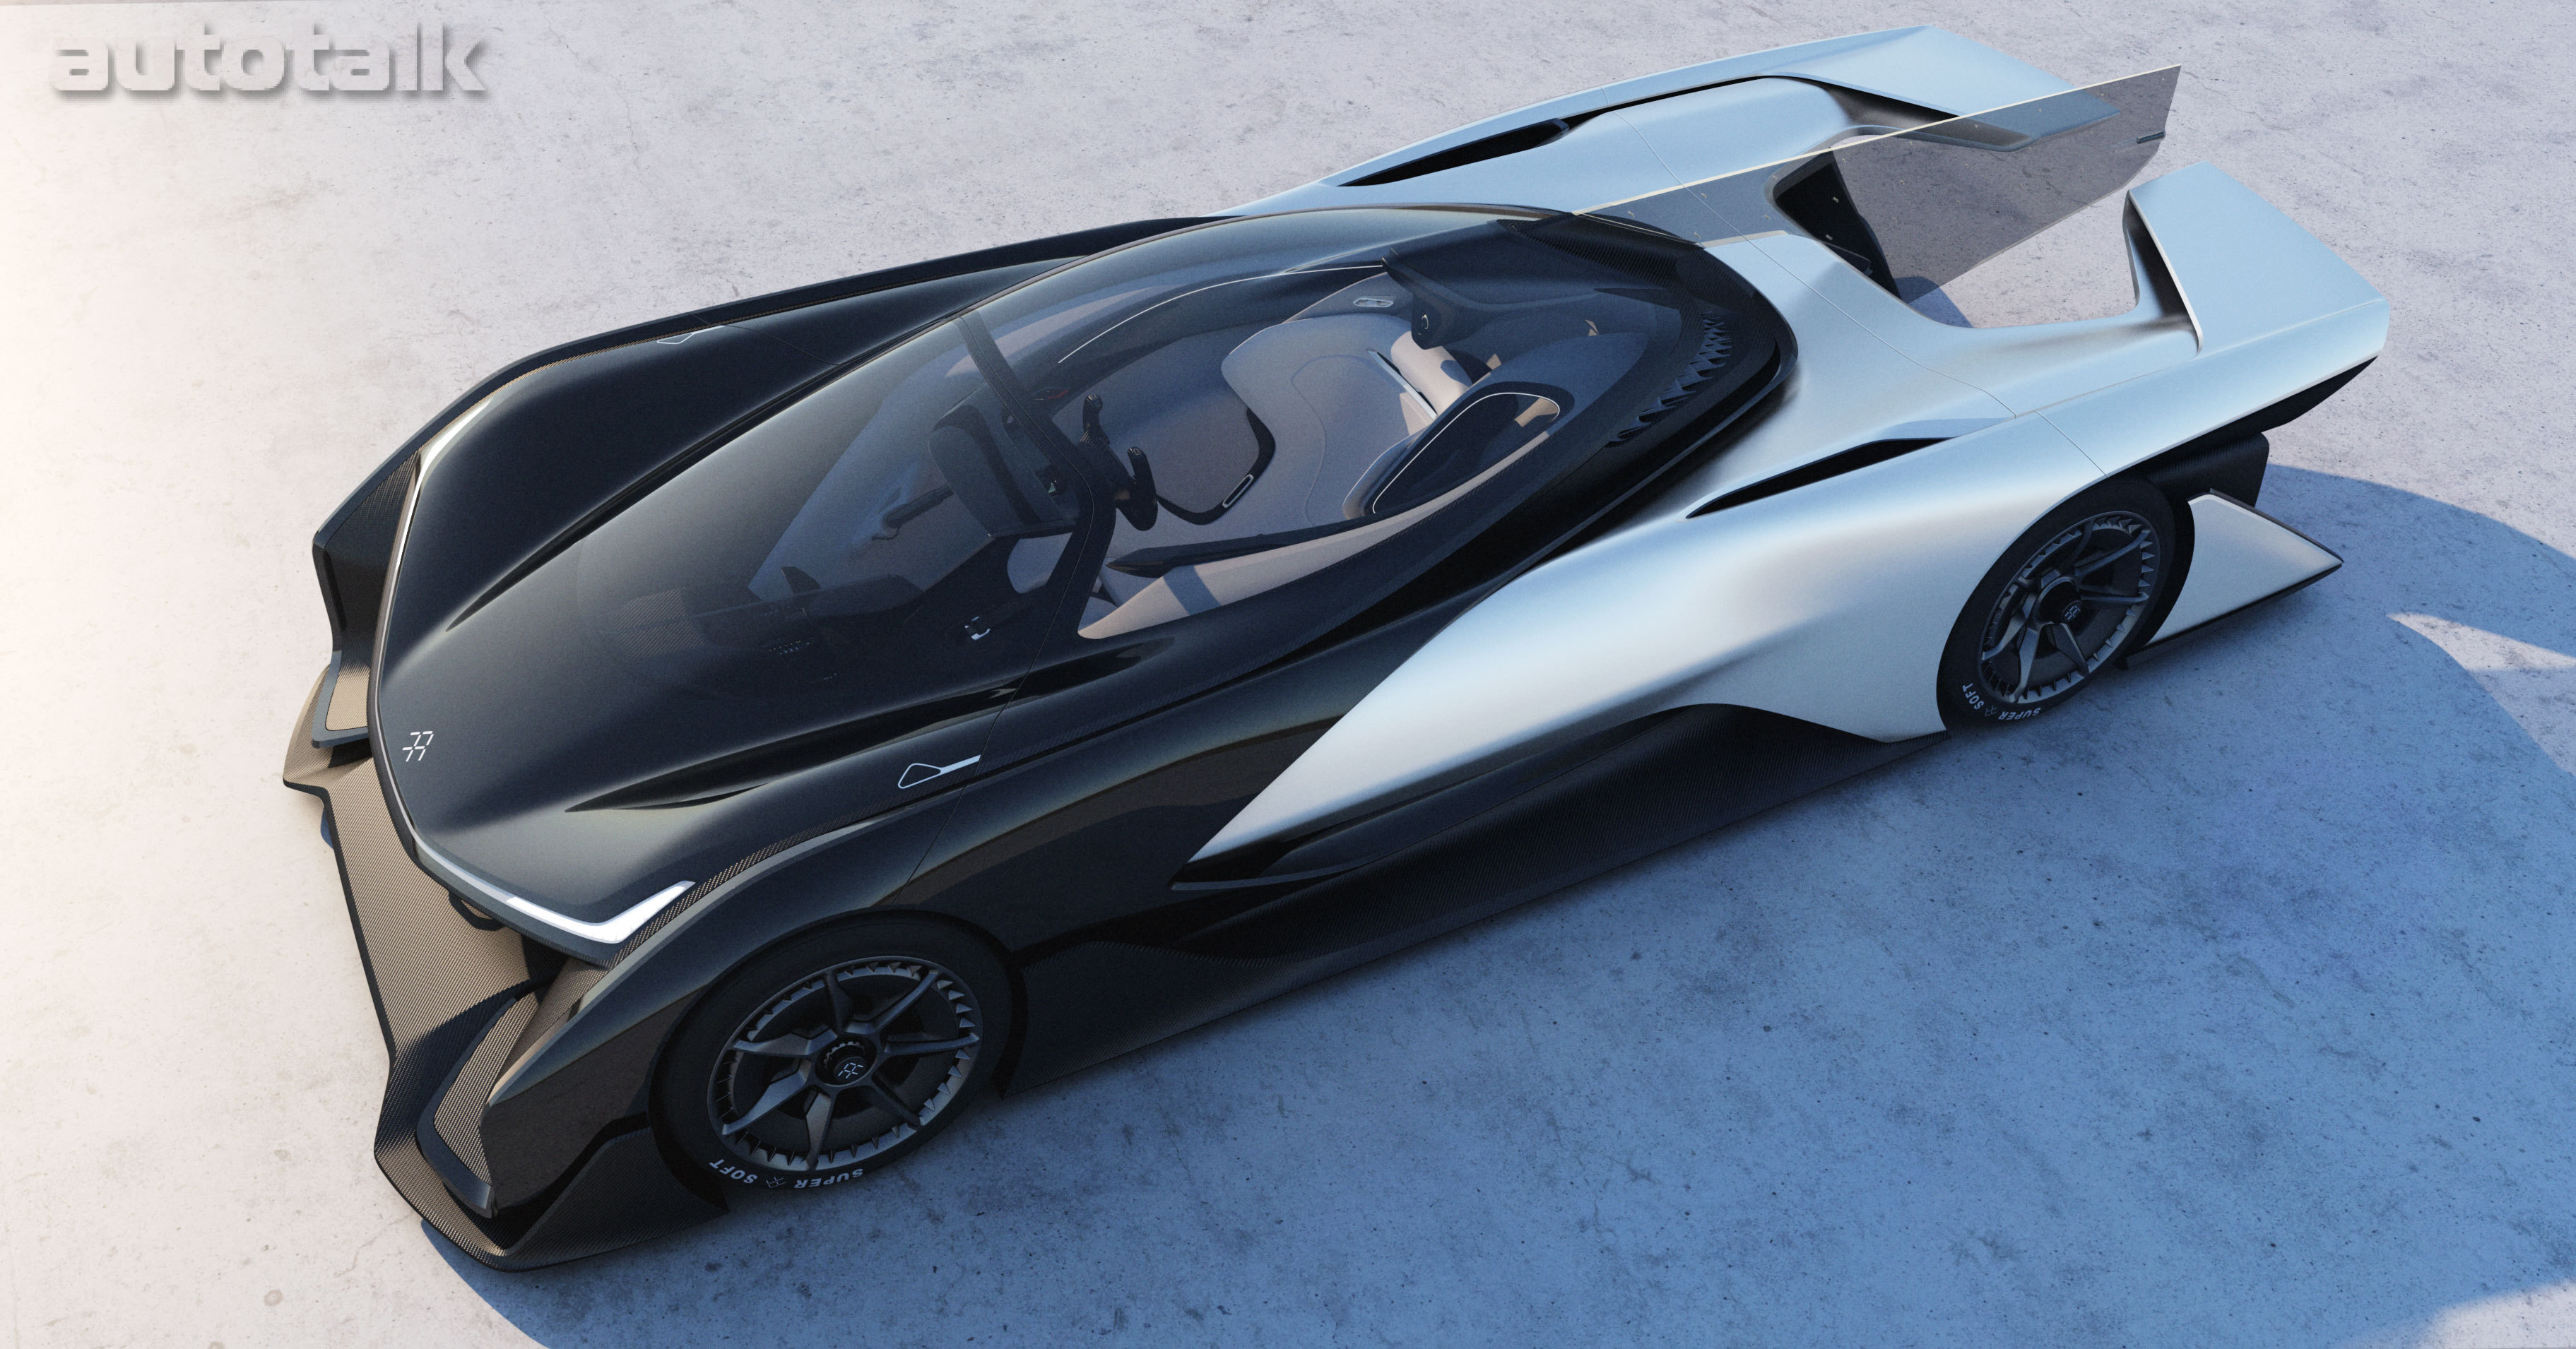 Faraday Future FFZERO1 Concept vehicle design